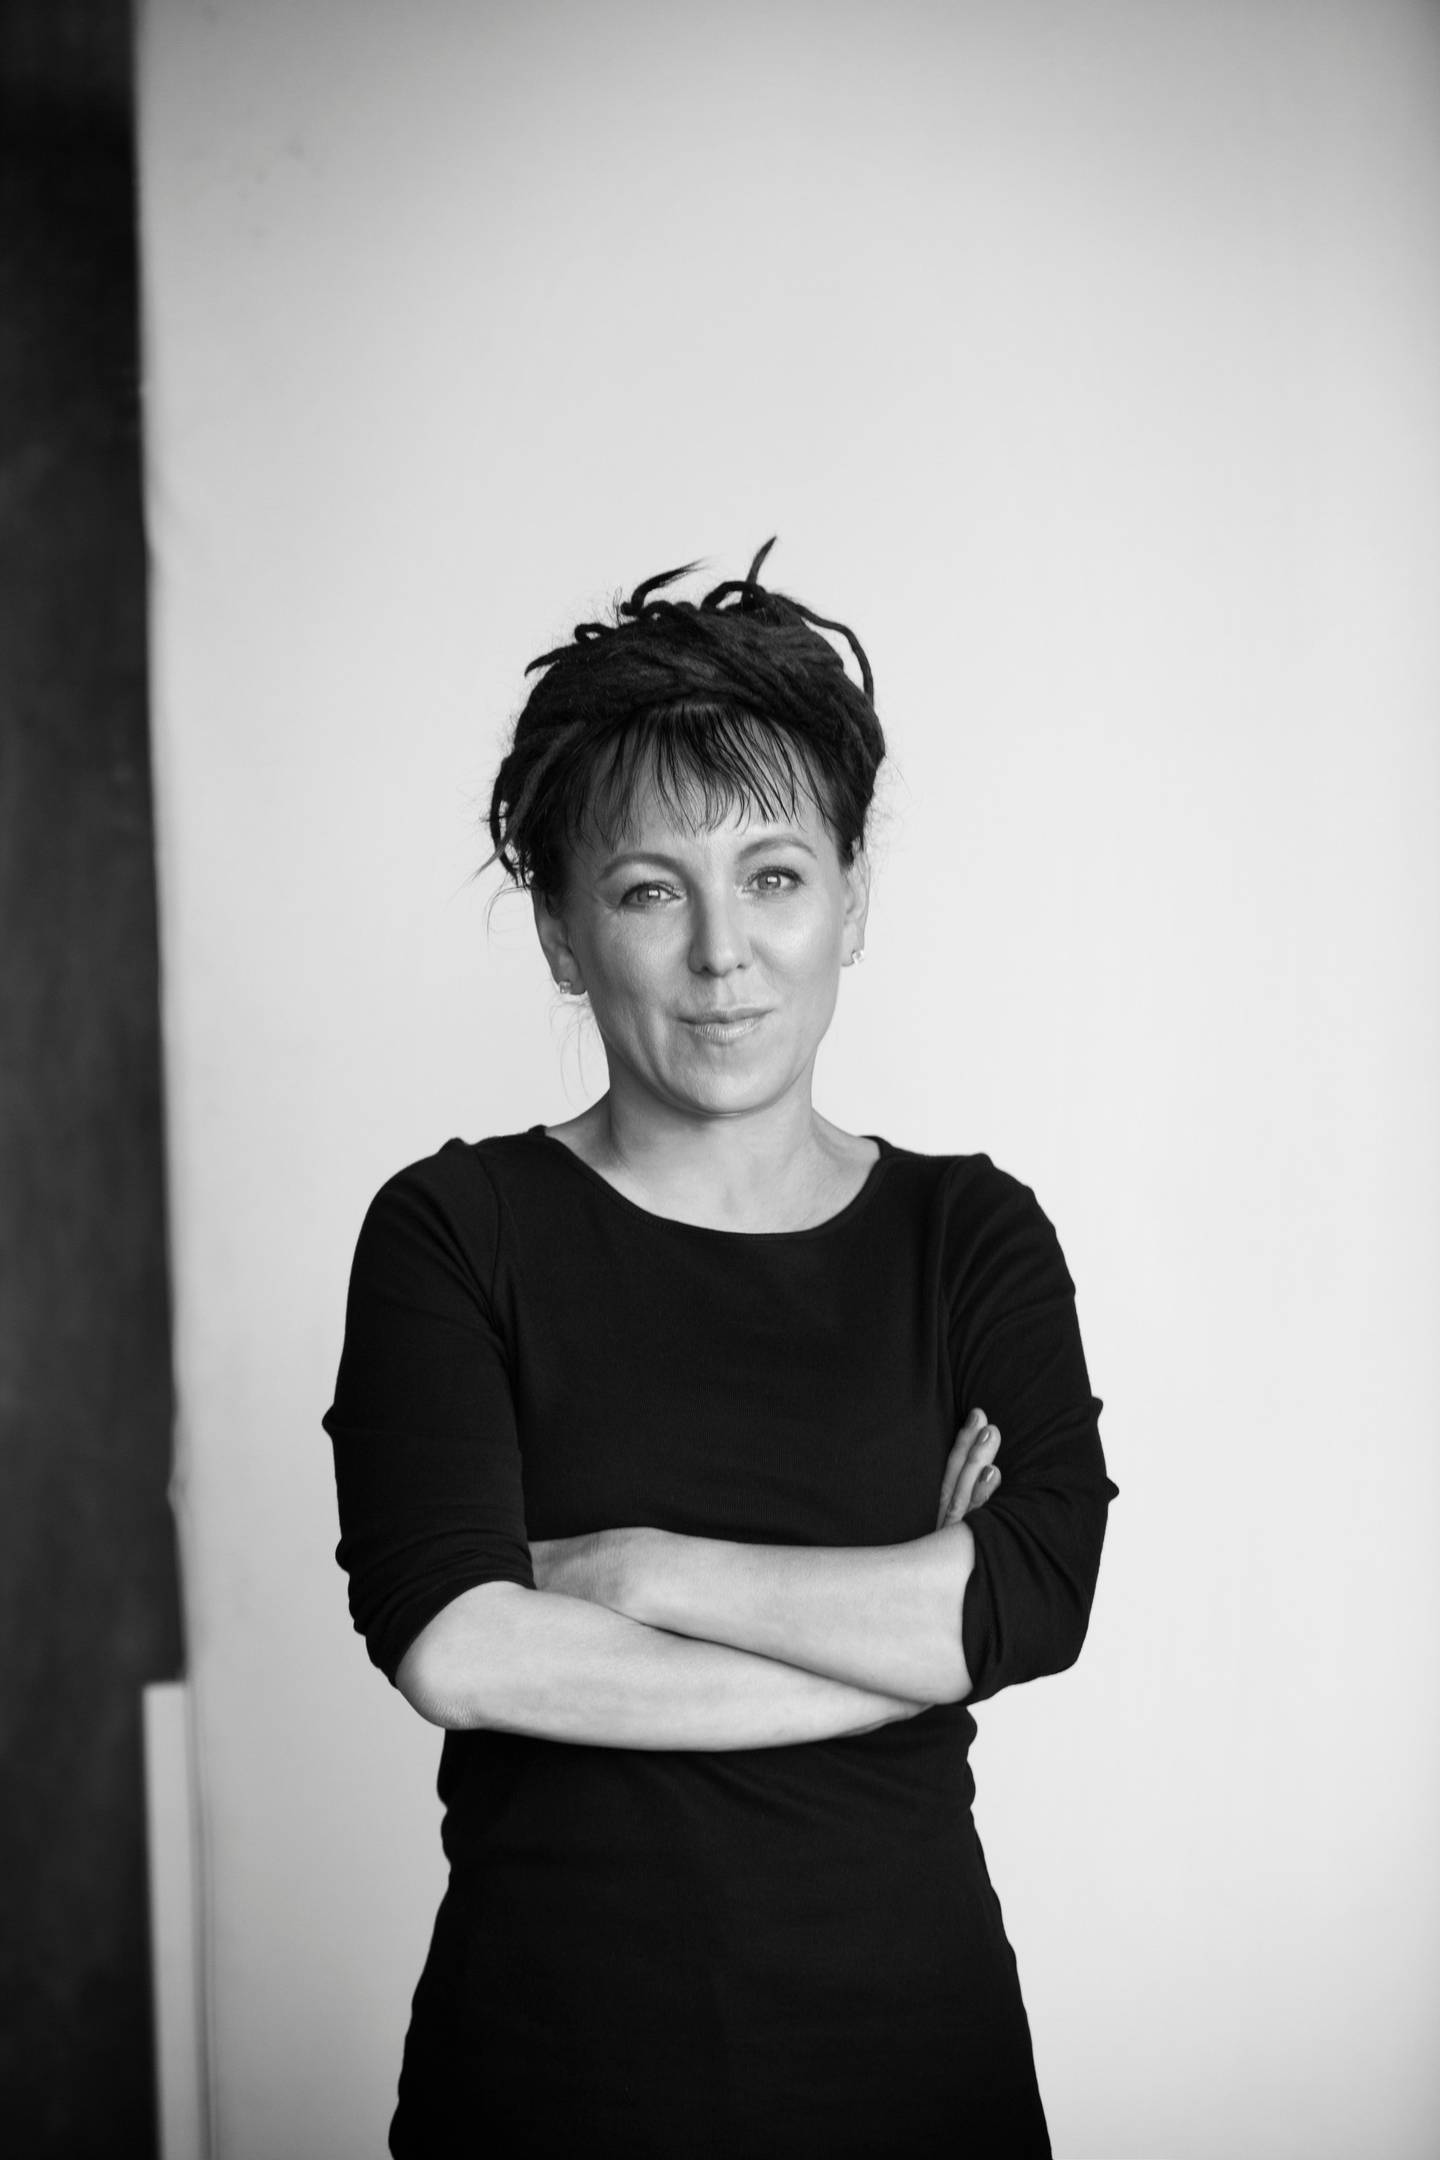 Nobelprisvinner Olga Tokarczuk